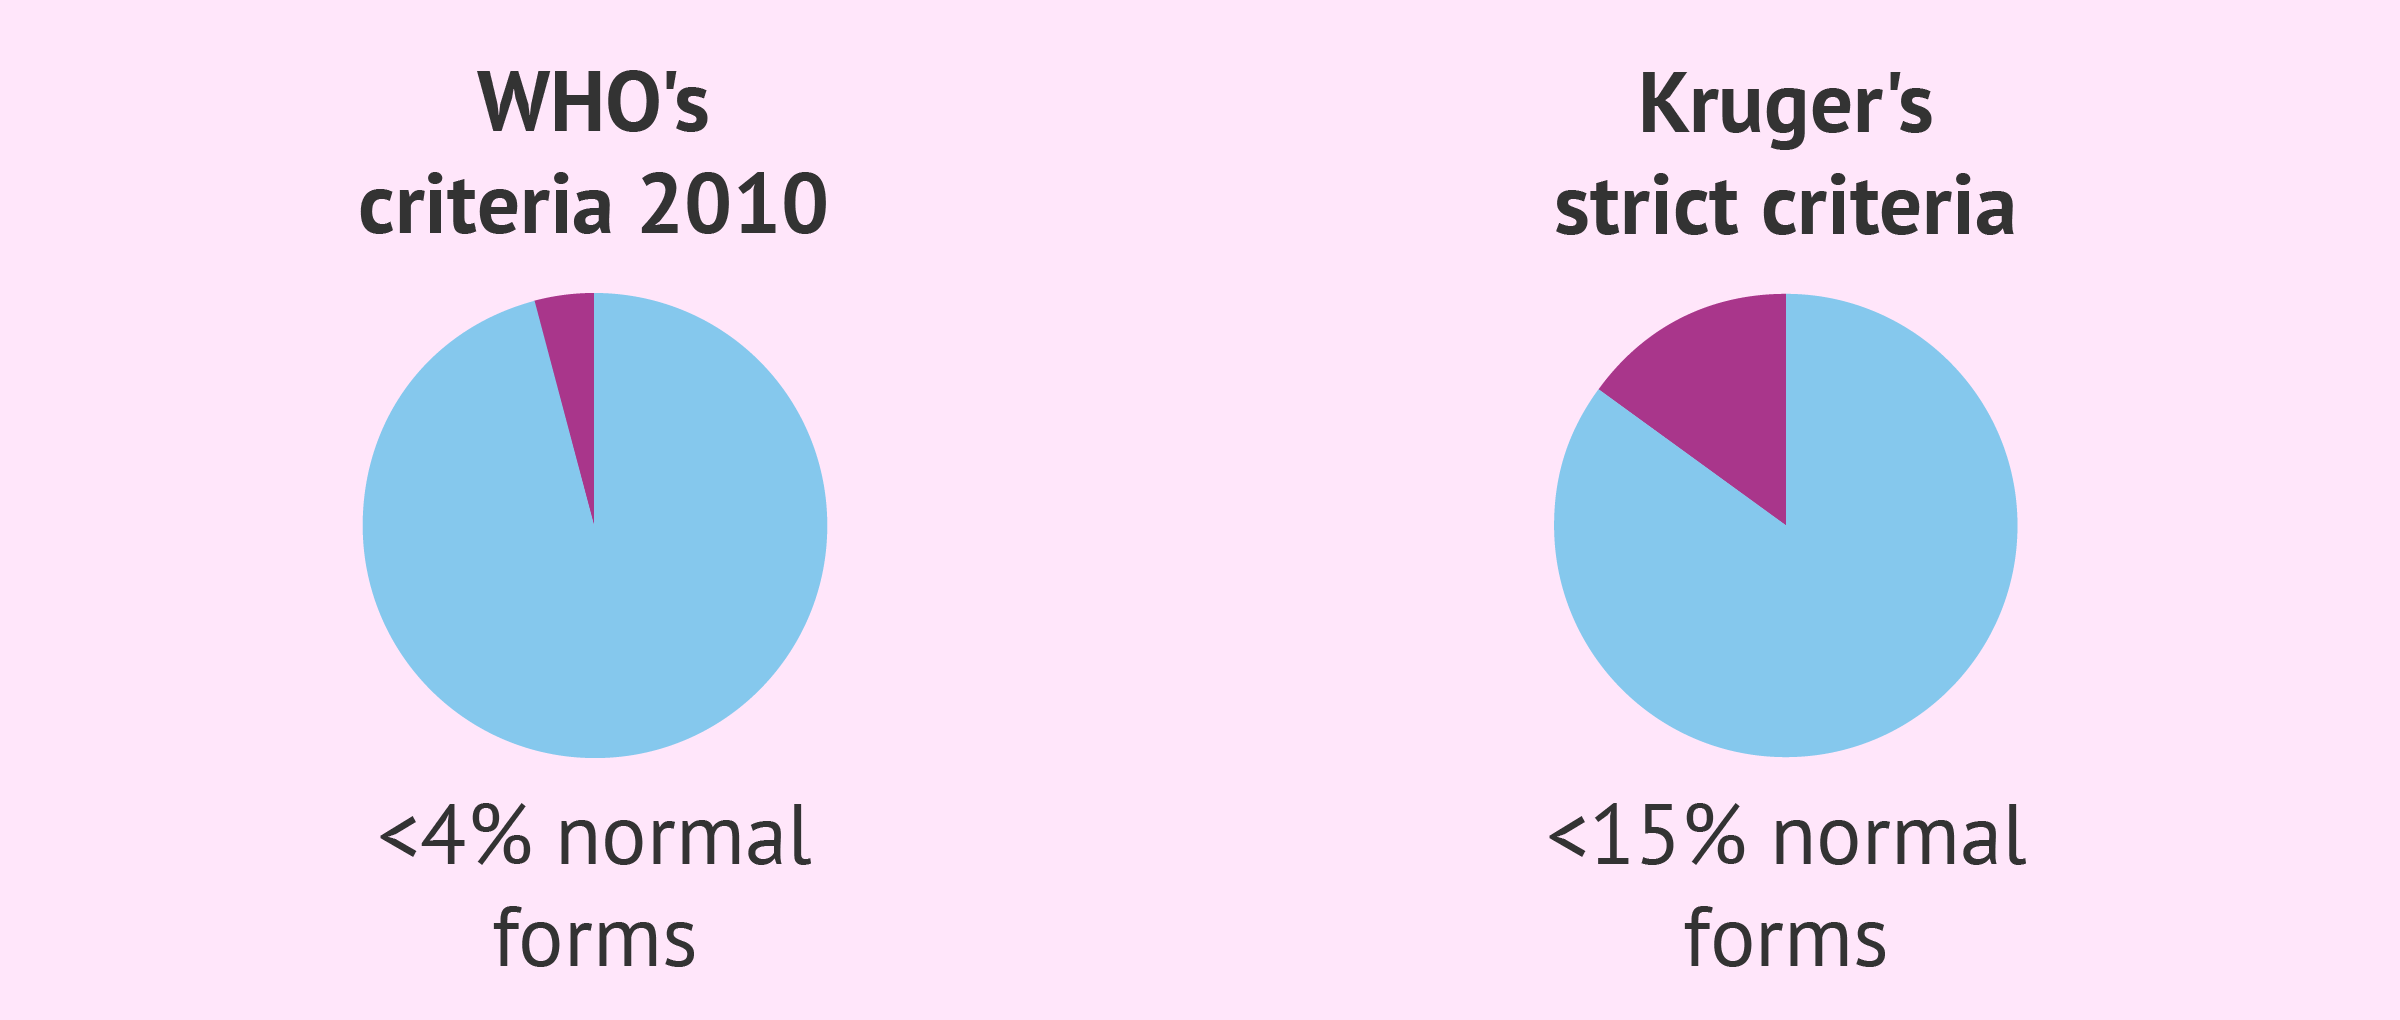 Kruger vs. WHO criteria for sperm analysis